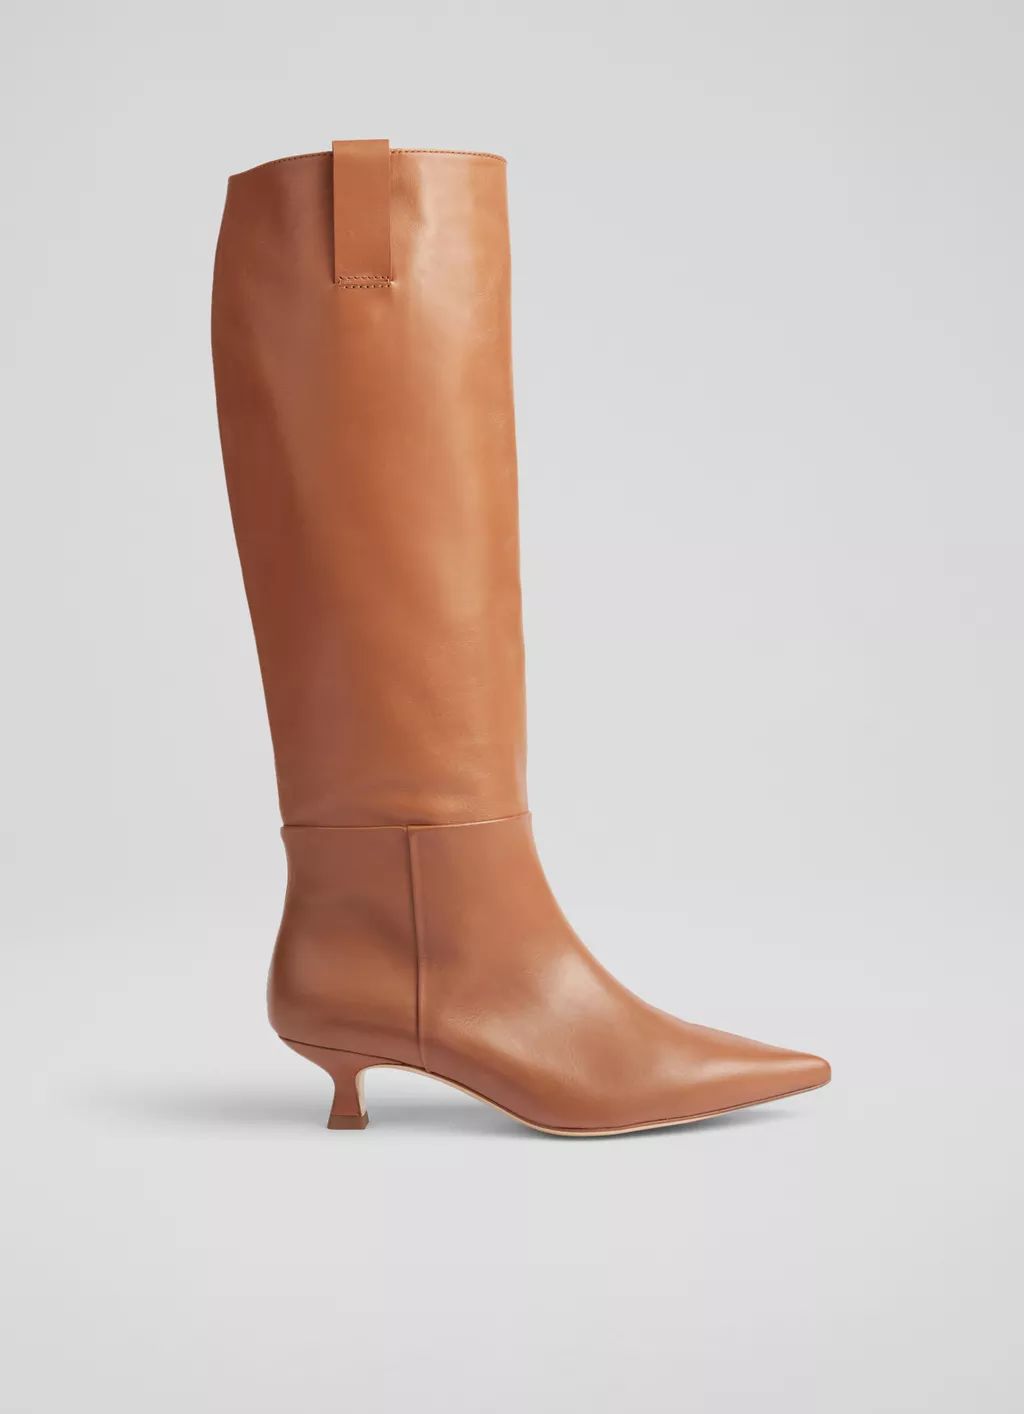 Eden Tan Leather Western Style Knee-High Boots | L.K. Bennett (UK)